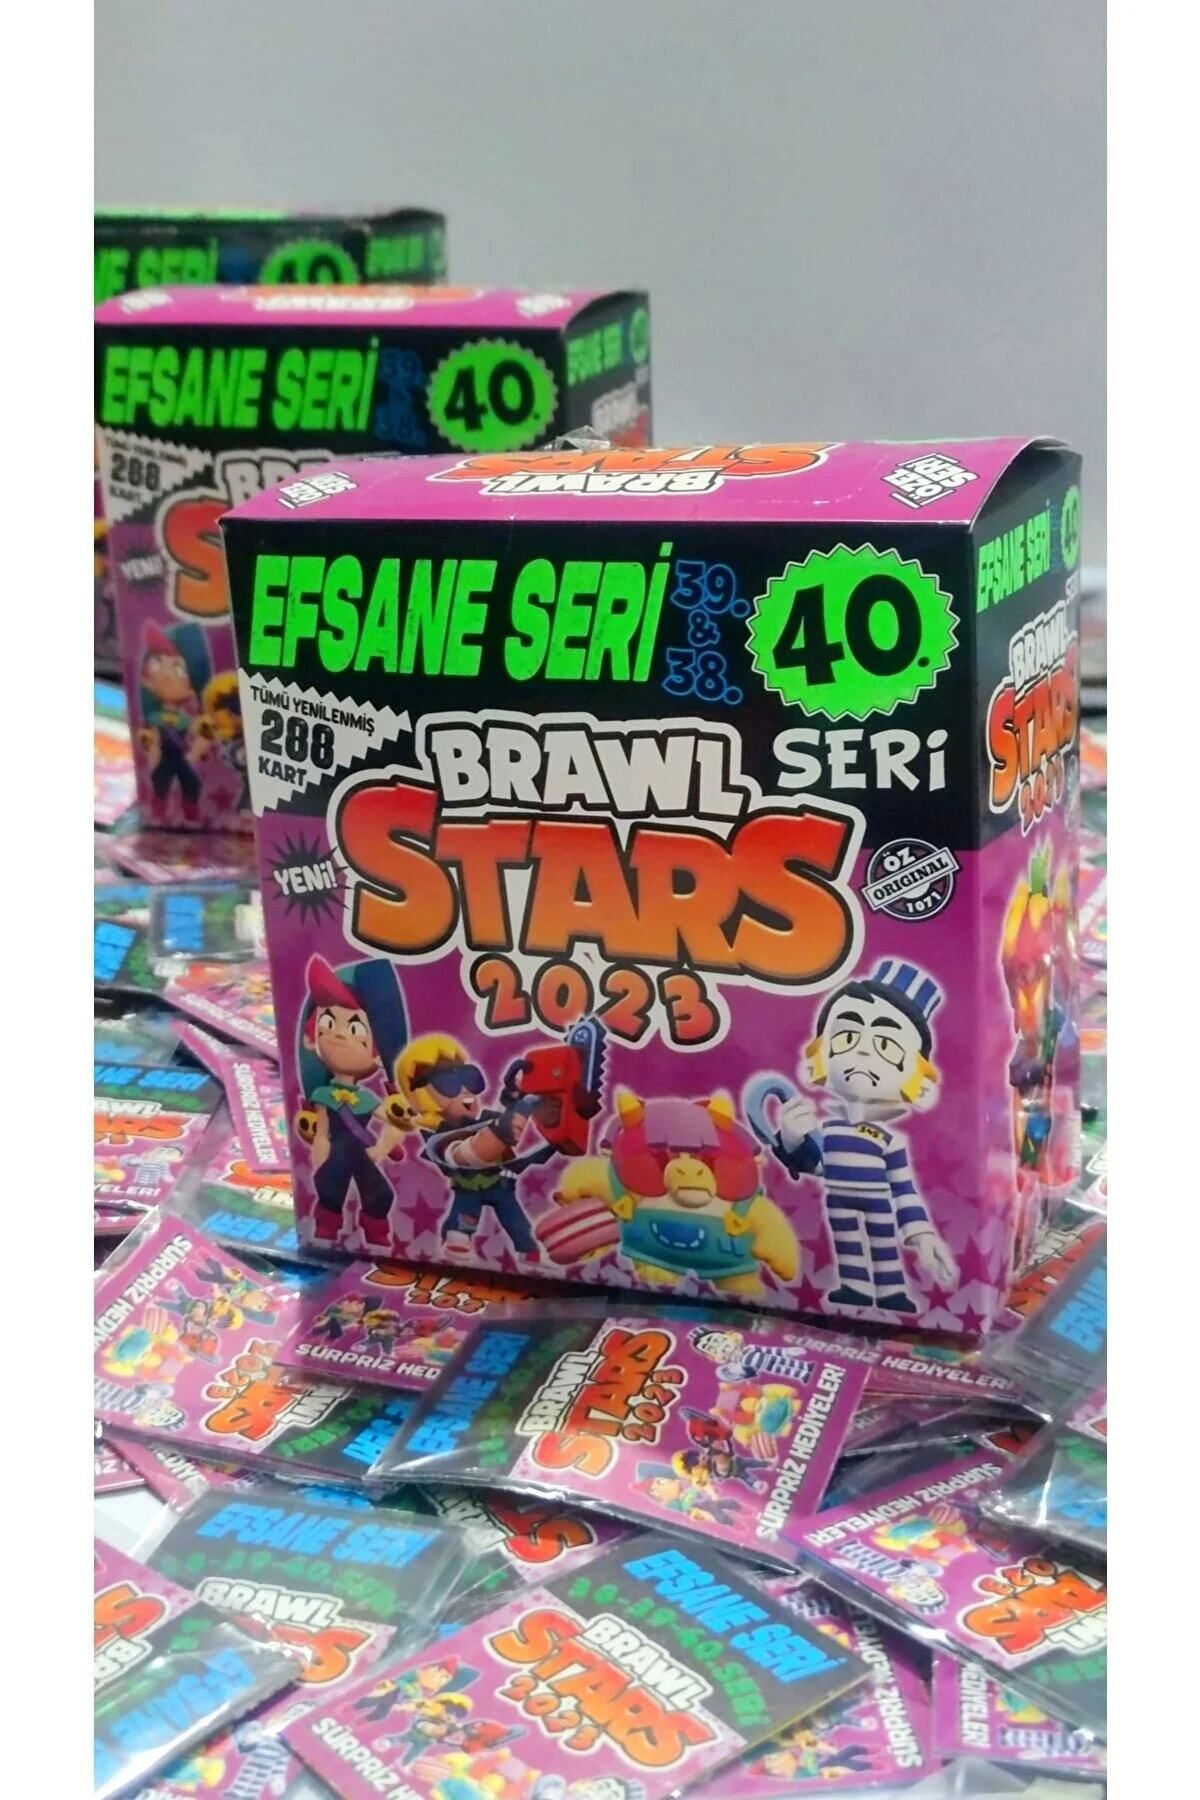 BRAWL STARS Efsane Seri Oyun Kartı 200 Paket 400 Kart 38-39-40.son Seri Newbrendhome